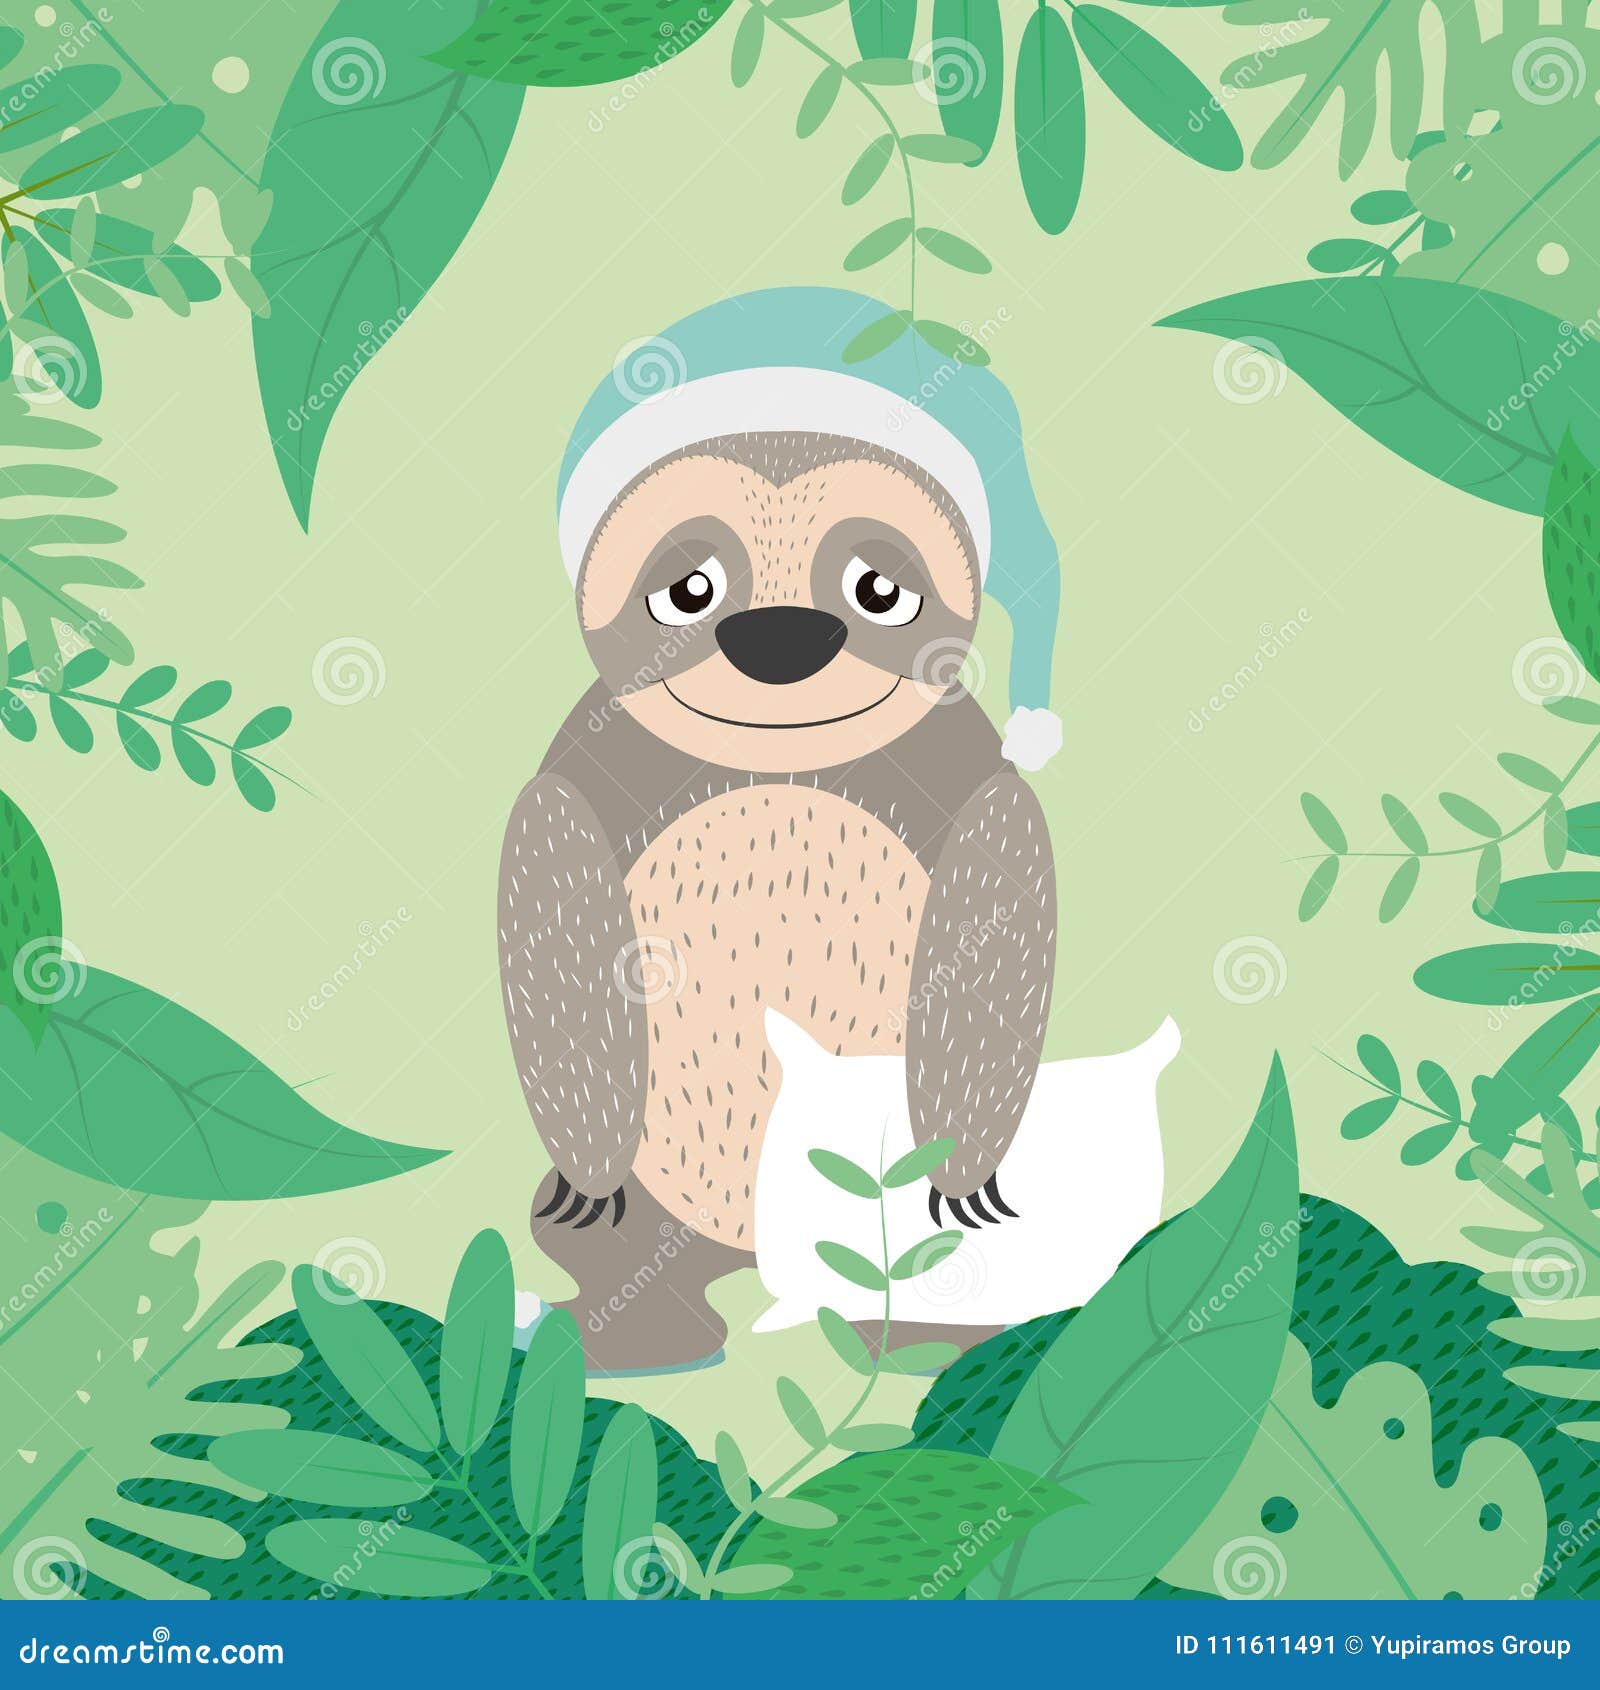 cute sloth with pijama